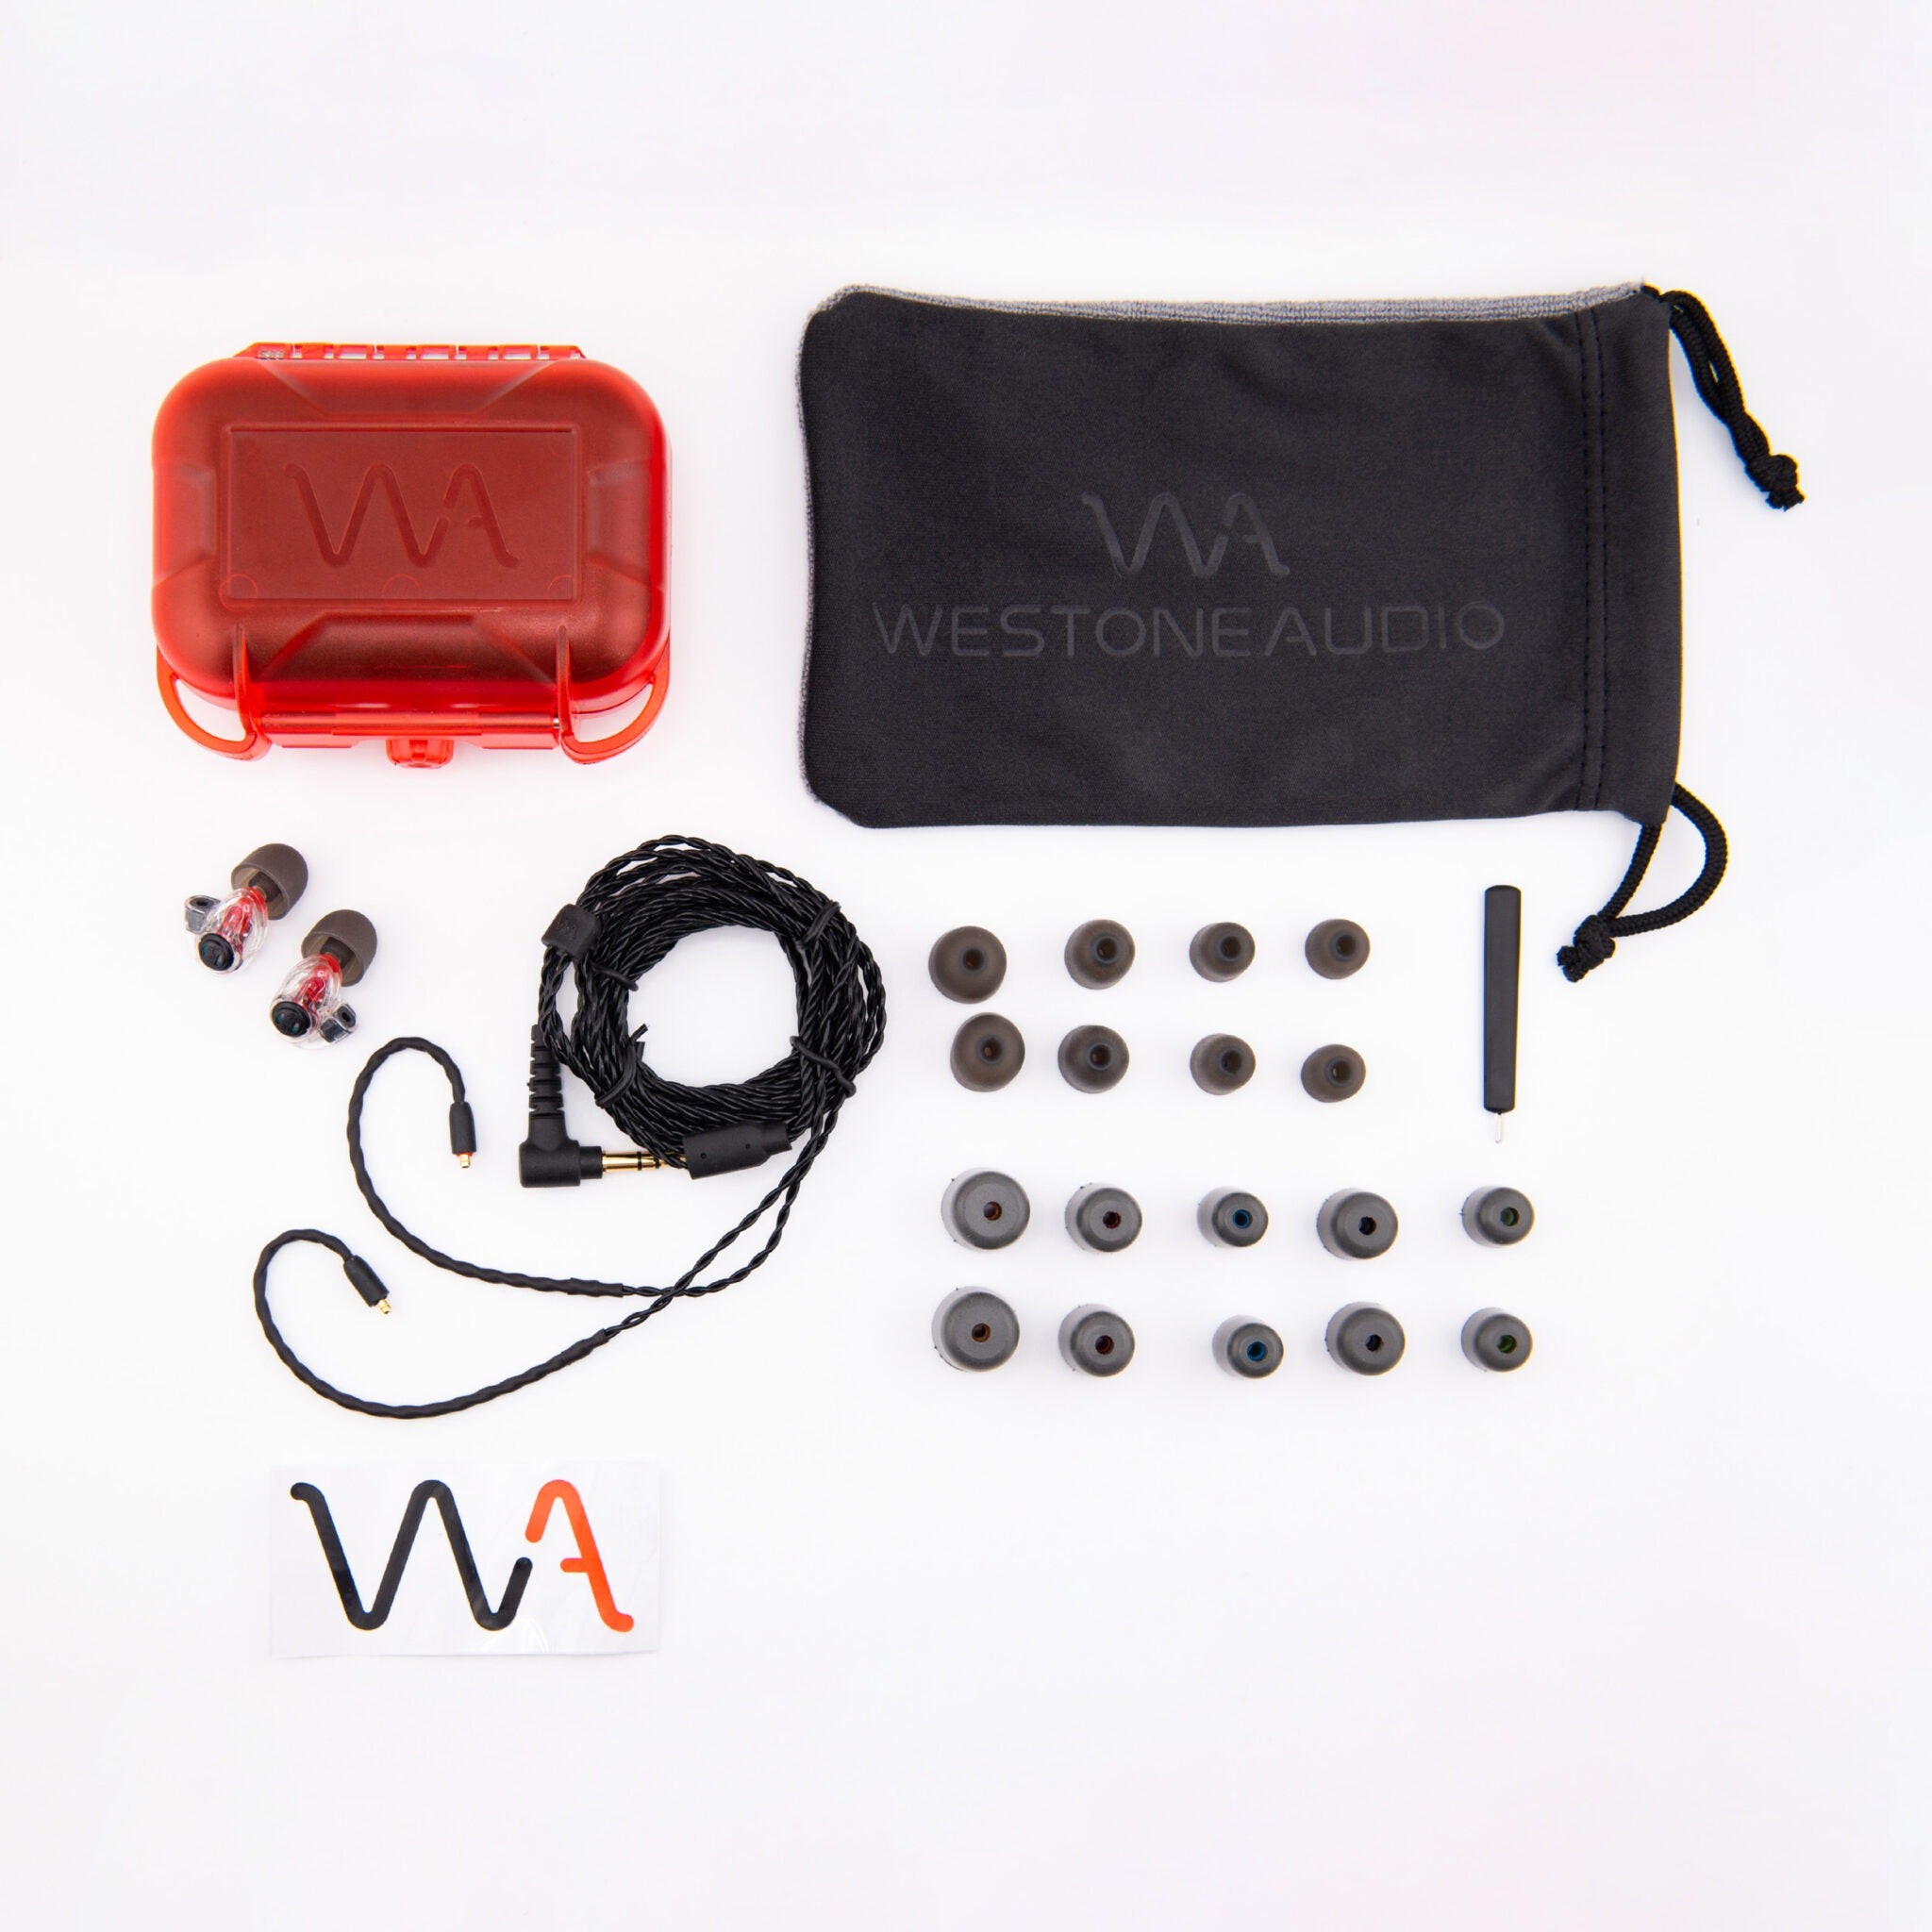 Westone Audio Am Pro X10 1-Driver Universal In-Ear Monitors